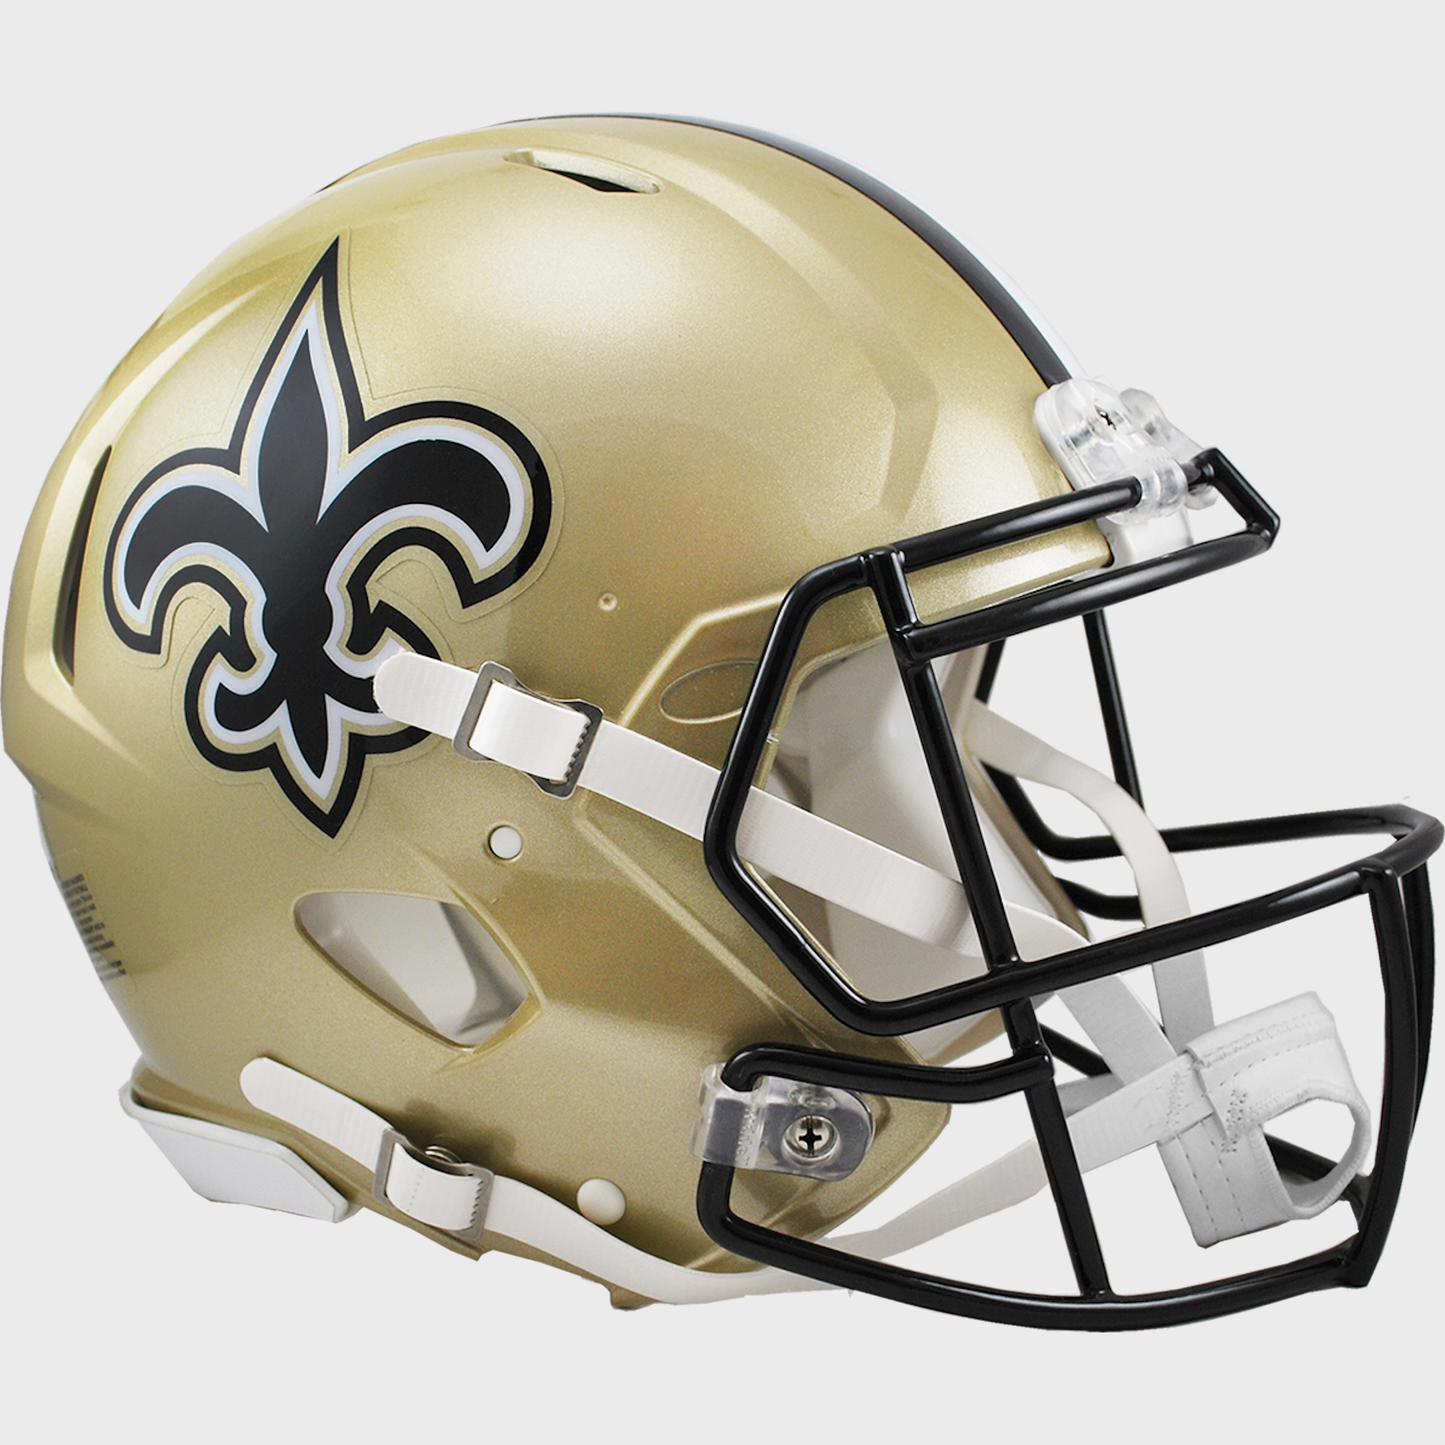 New Orleans Saints authentic full size helmet